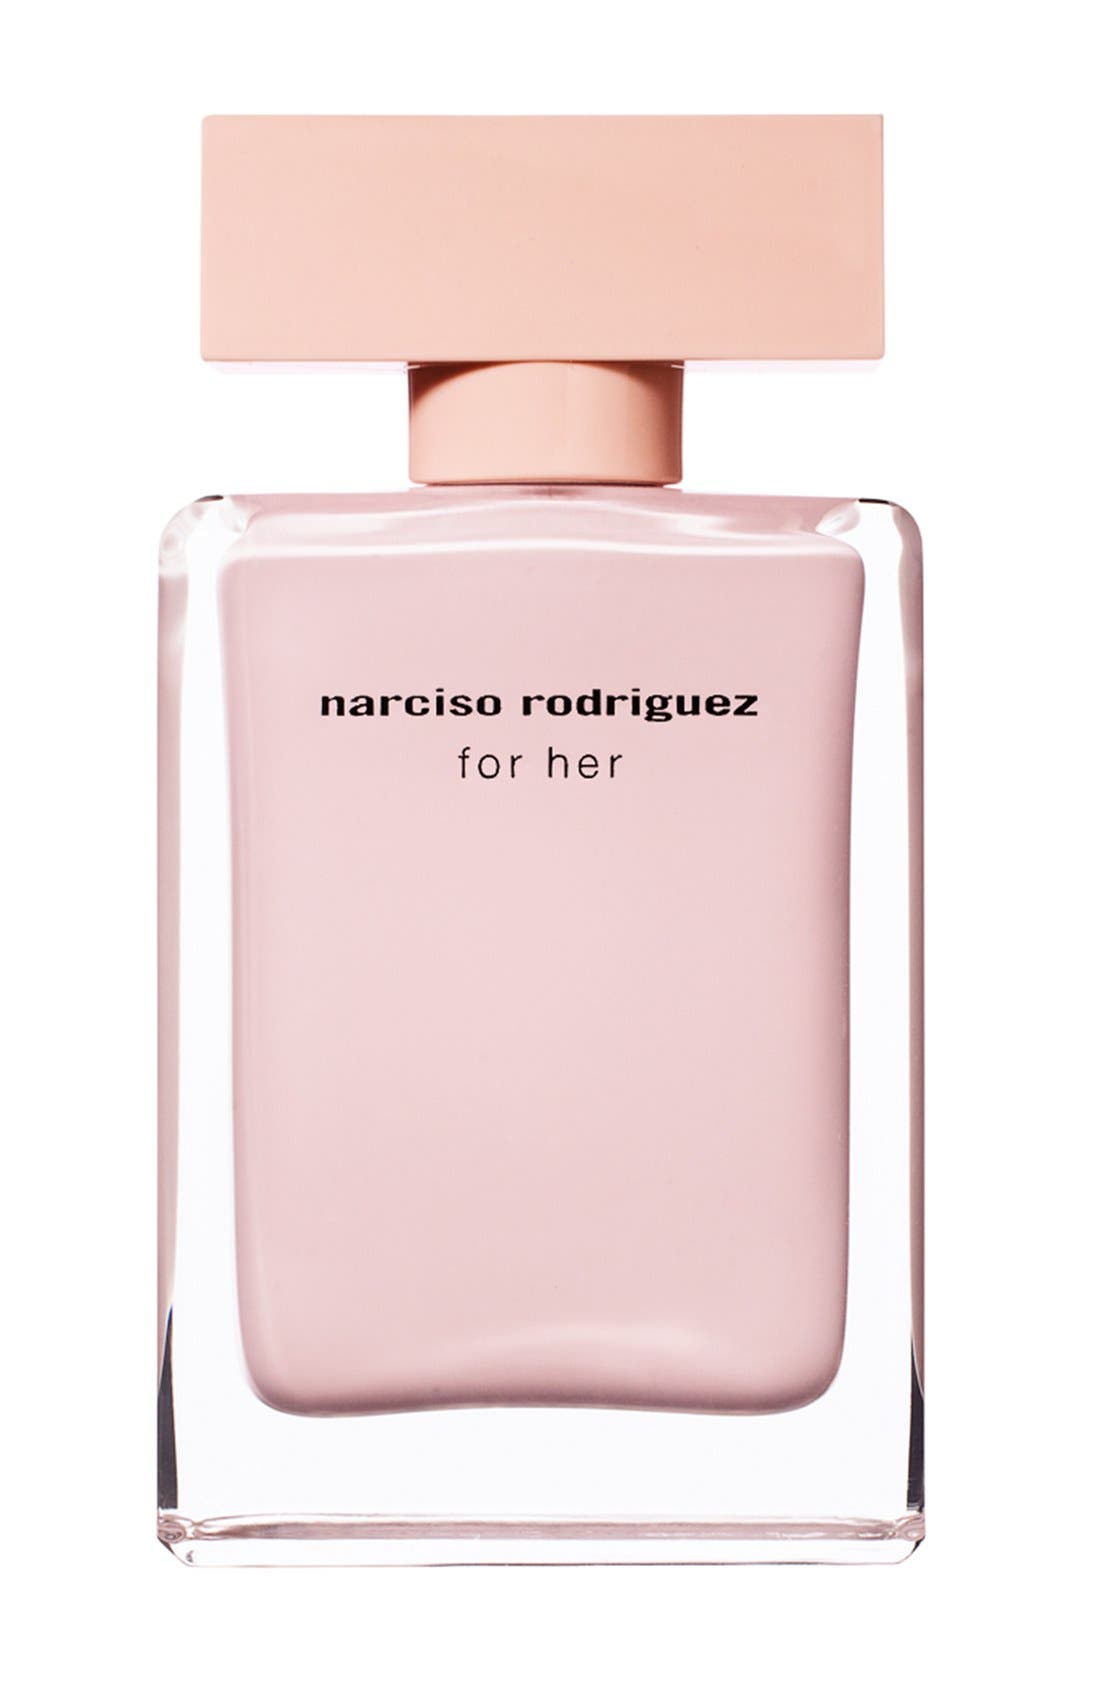 Narciso Rodriguez For Her Eau de Parfum at Nordstrom, Size 3.3 Oz